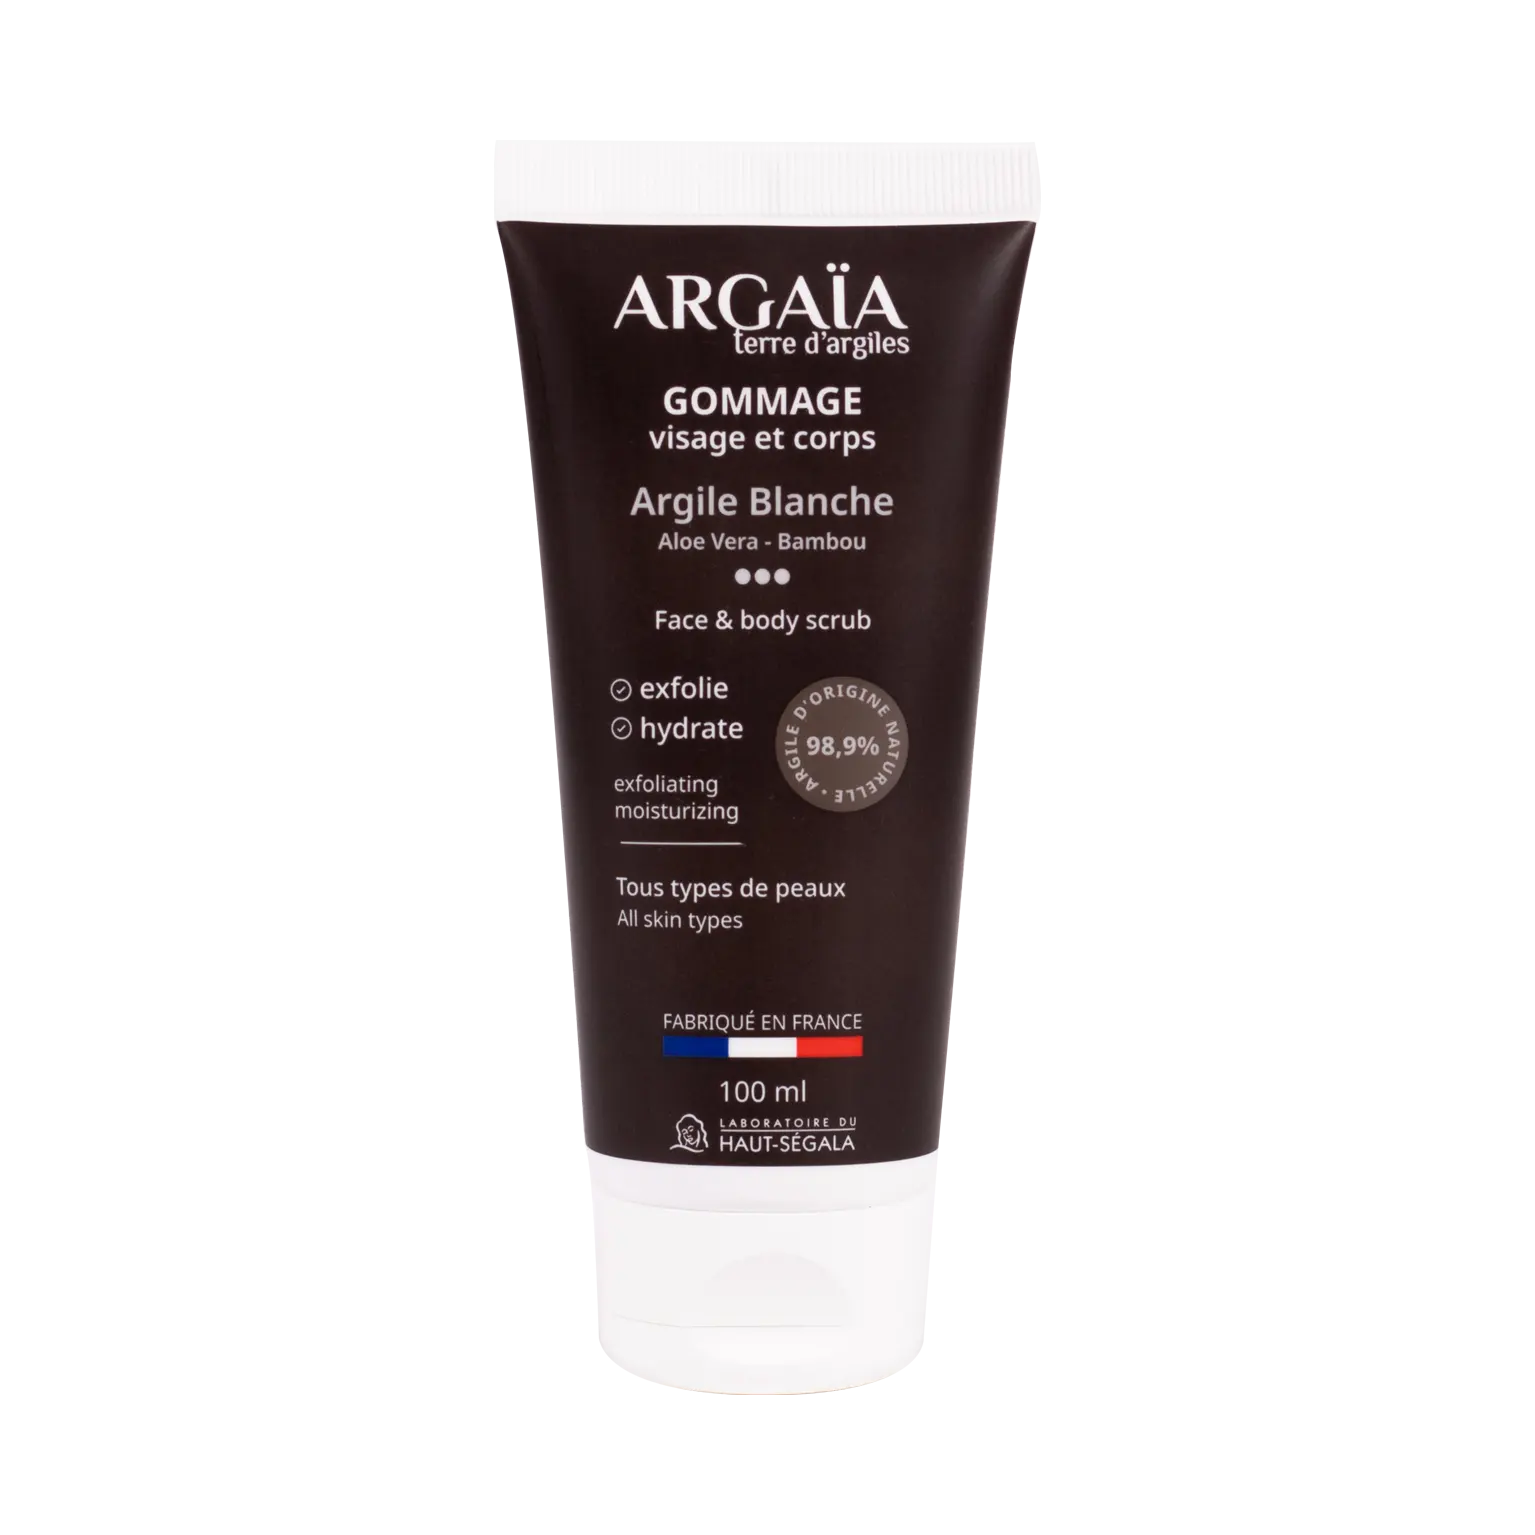 ARGAIAナチュラルホワイトクレイフェイスボディスクラブアロエベラ注入角質除去浄化保湿剤肌のブライトニングホワイトニング